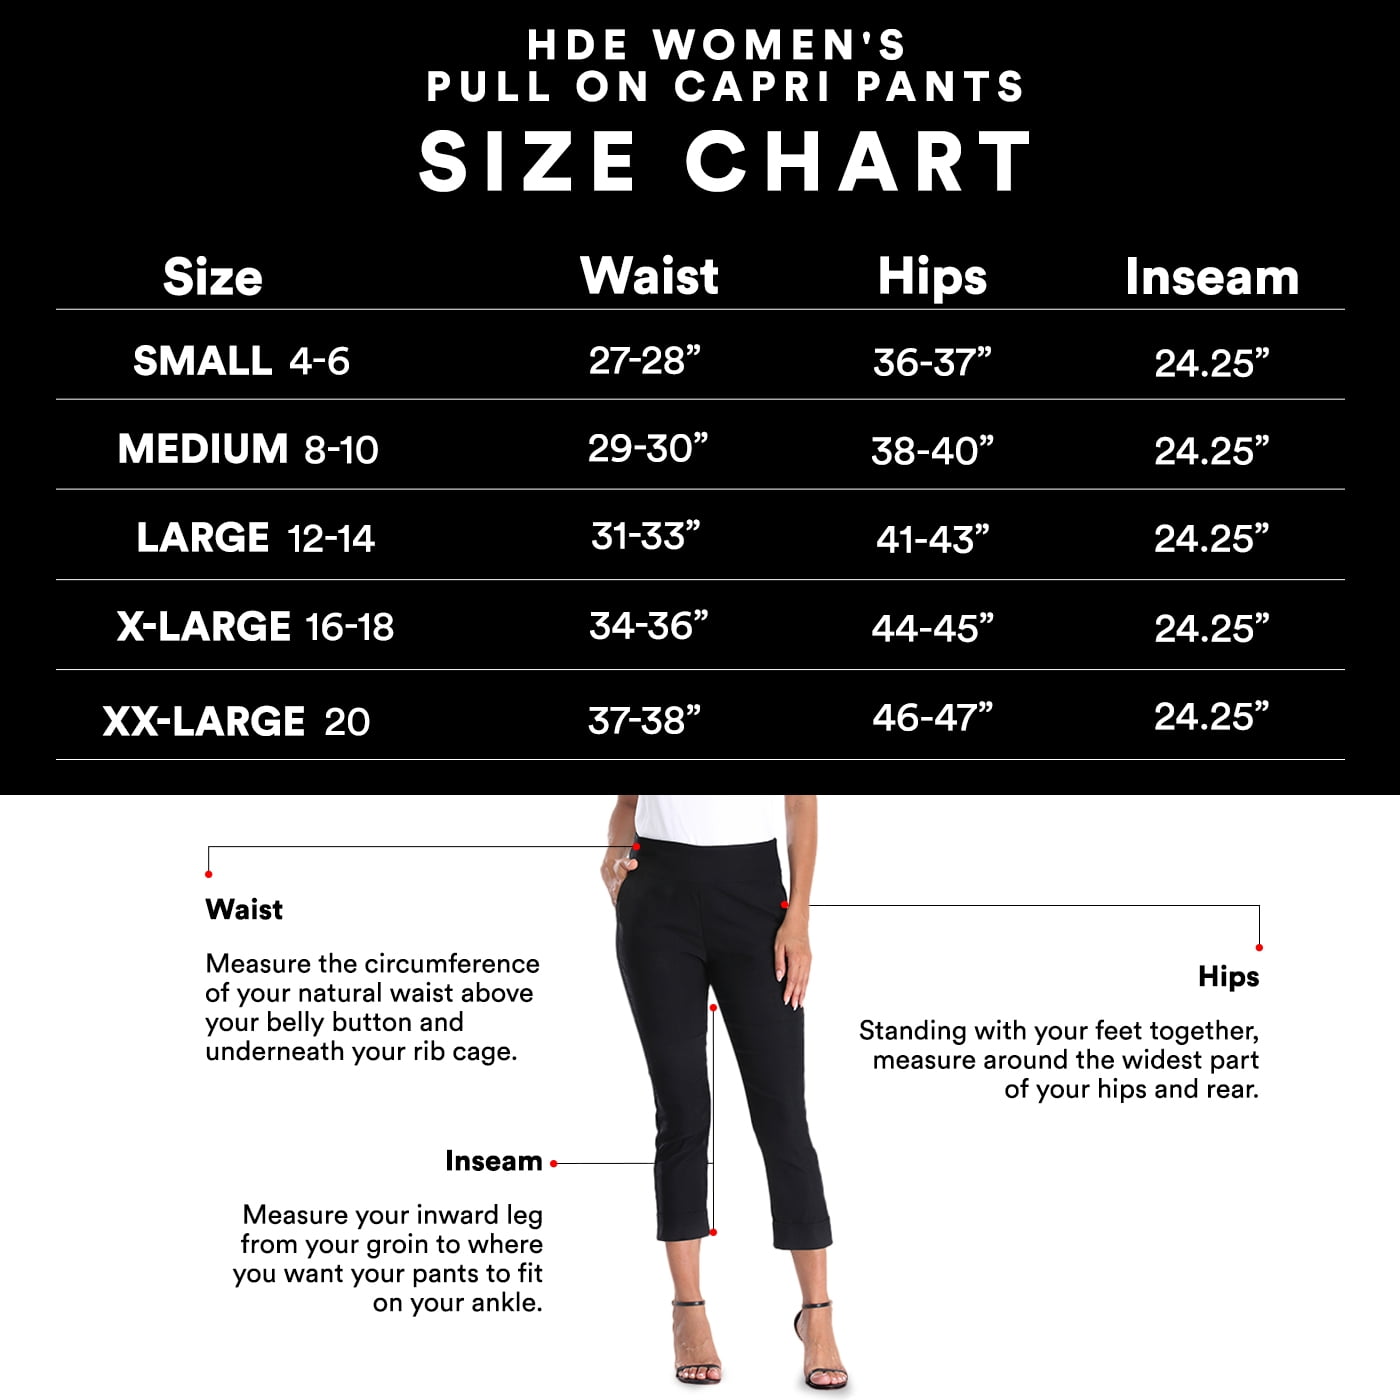 ZELOS Navy Cropped Capri Pull On Activewear Pants - Women's Size